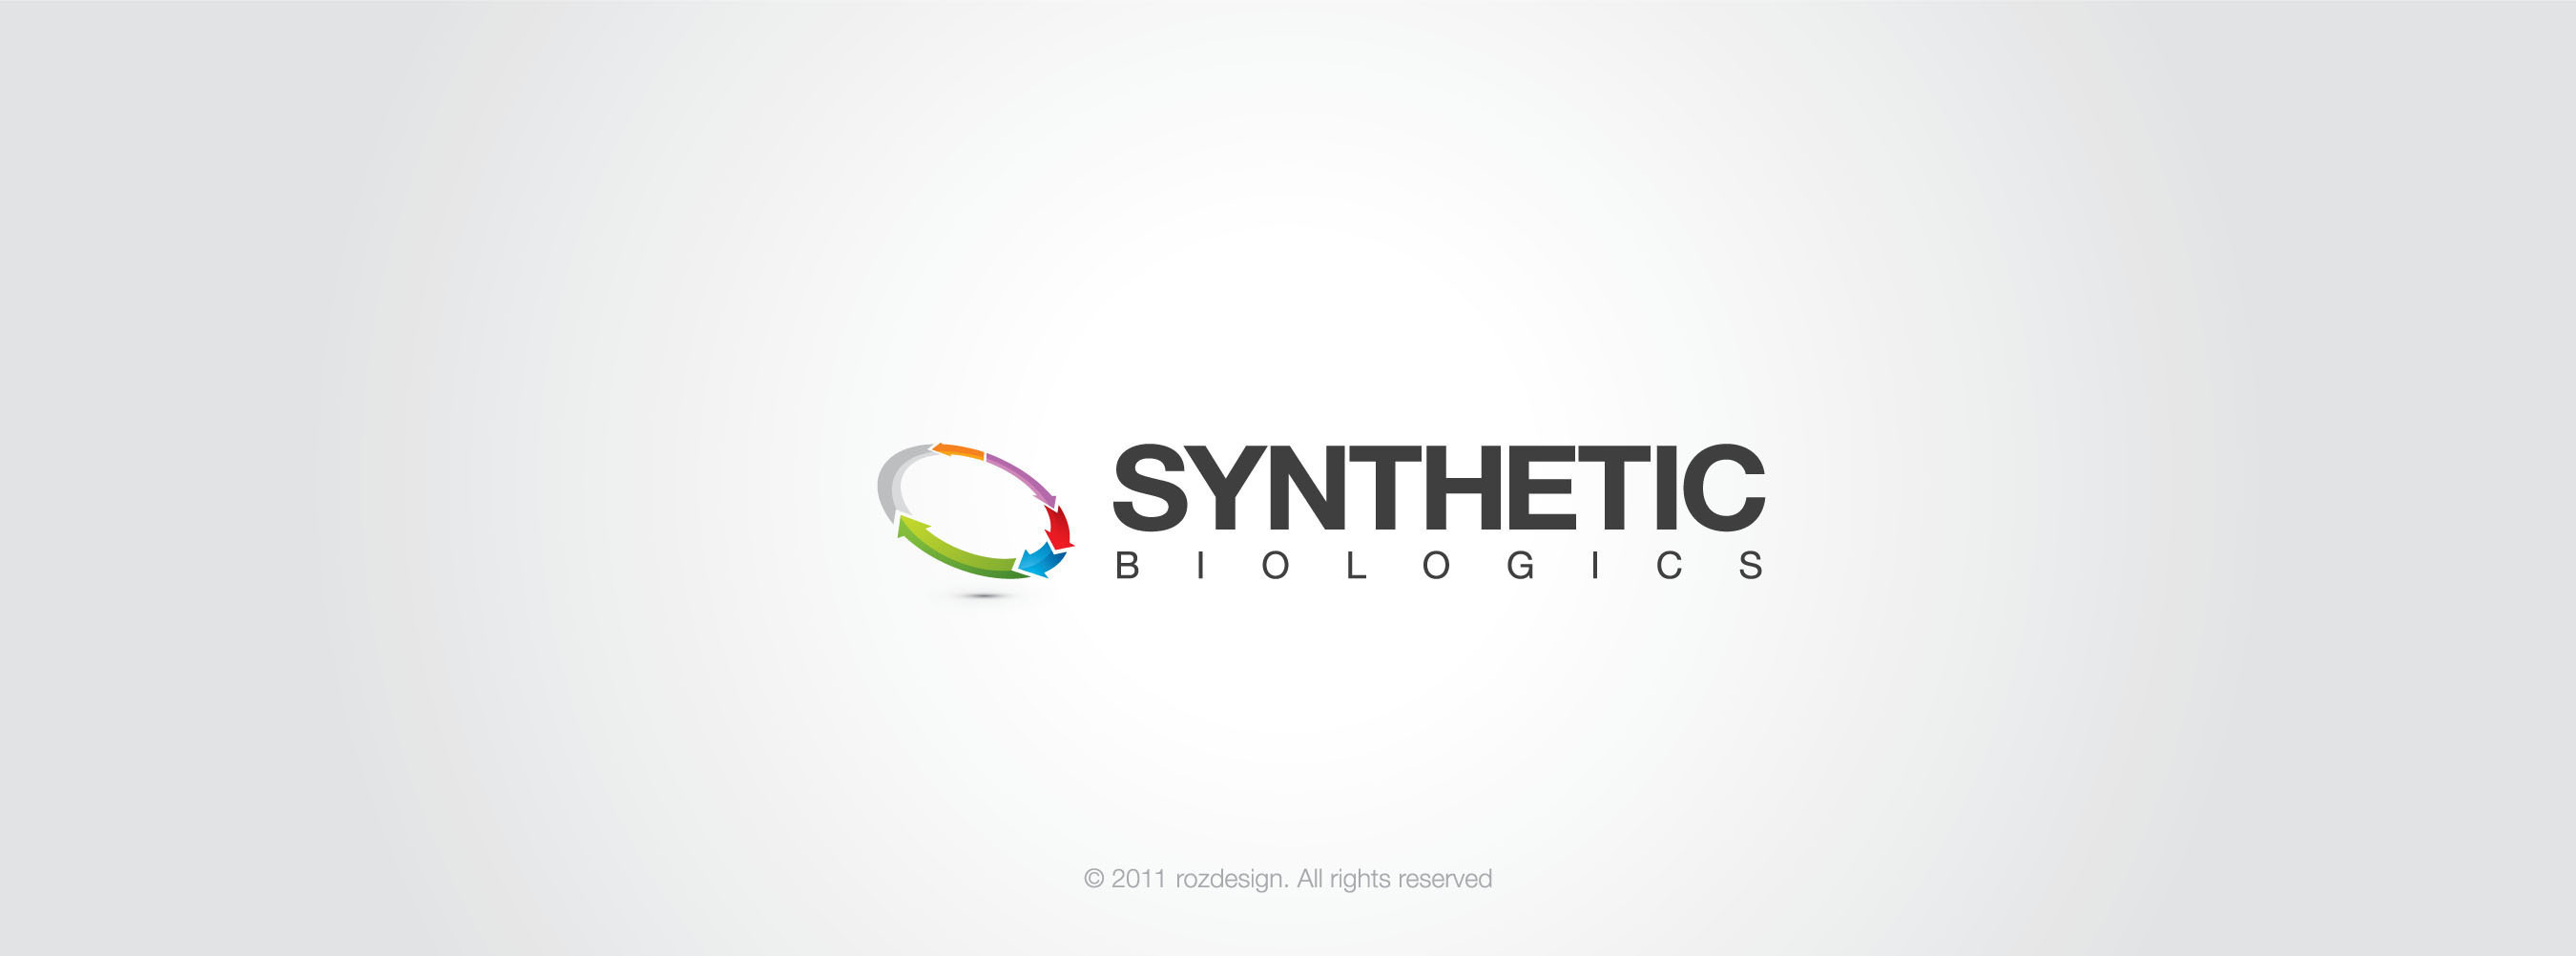 Synthetic Biologics, Inc. Logo. (PRNewsFoto/Synthetic Biologics, Inc.) (PRNewsFoto/SYNTHETIC BIOLOGICS, INC.)